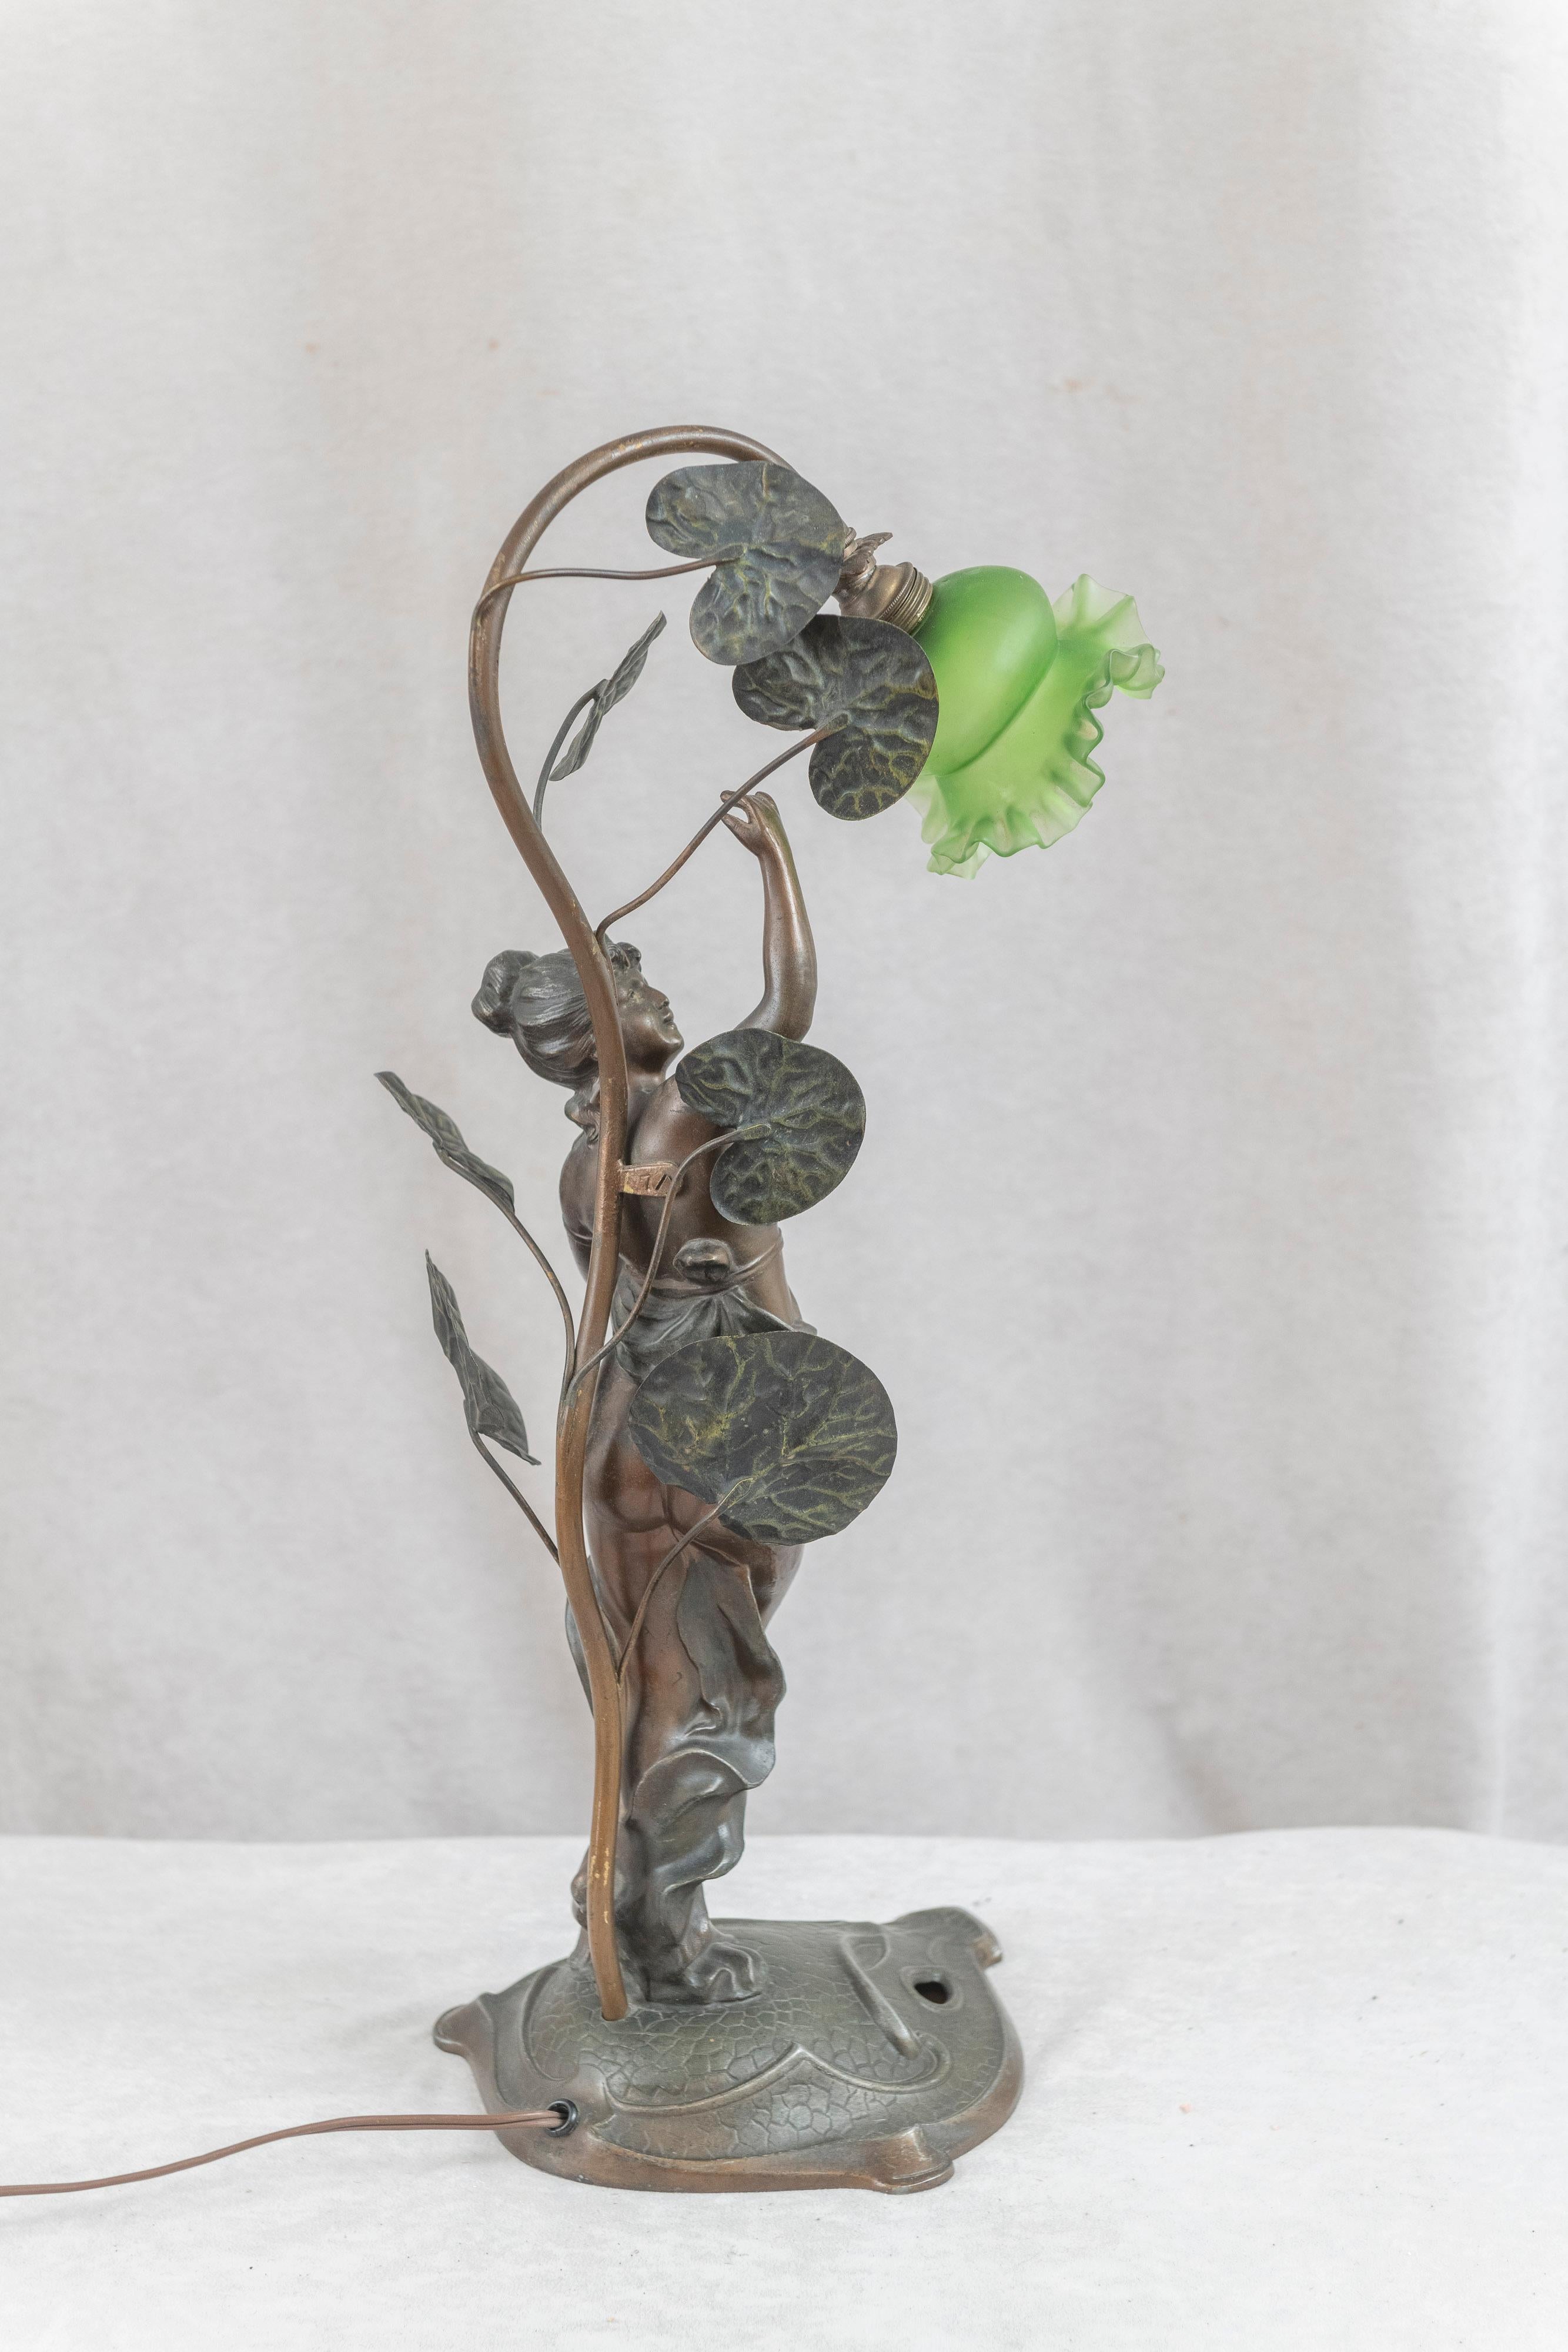 Cast Antique Art Nouveau Lamp, Maiden under Foliage W/ Original Green Shade, c1910